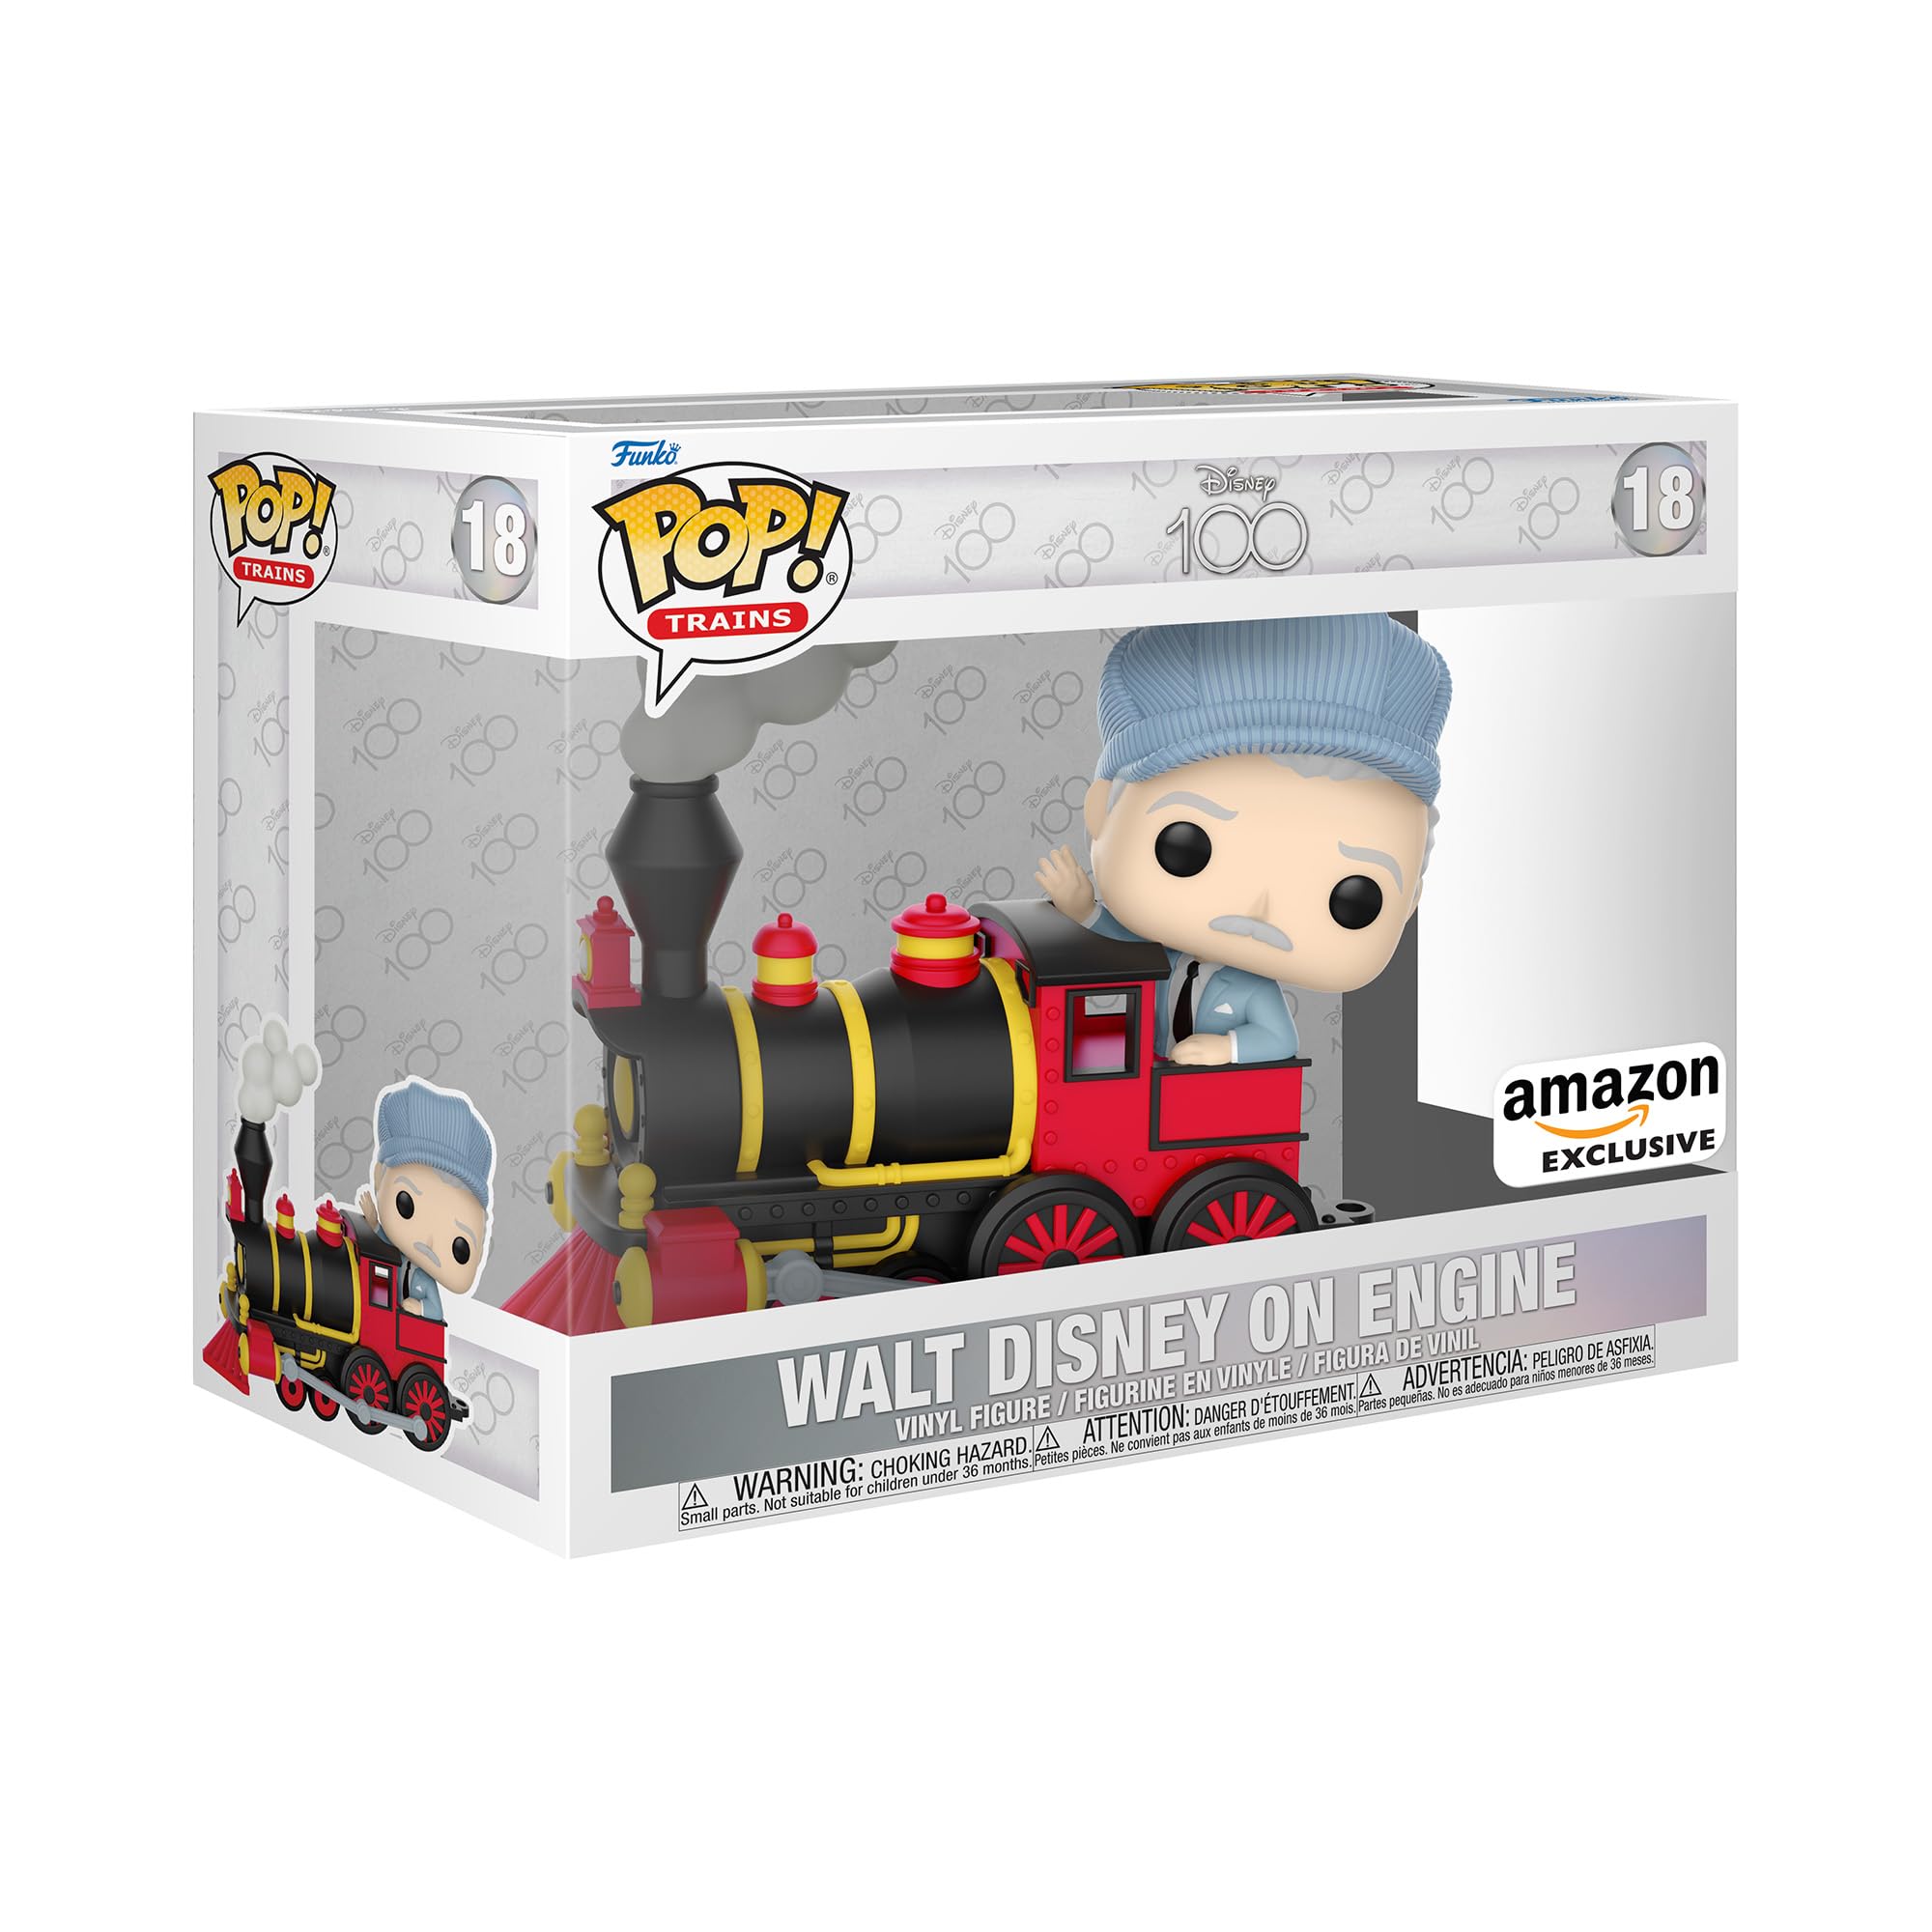 Funko Pop! Train: Disney 100 - Walt Disney on Engine, Walt Disney, Amazon Exclusive